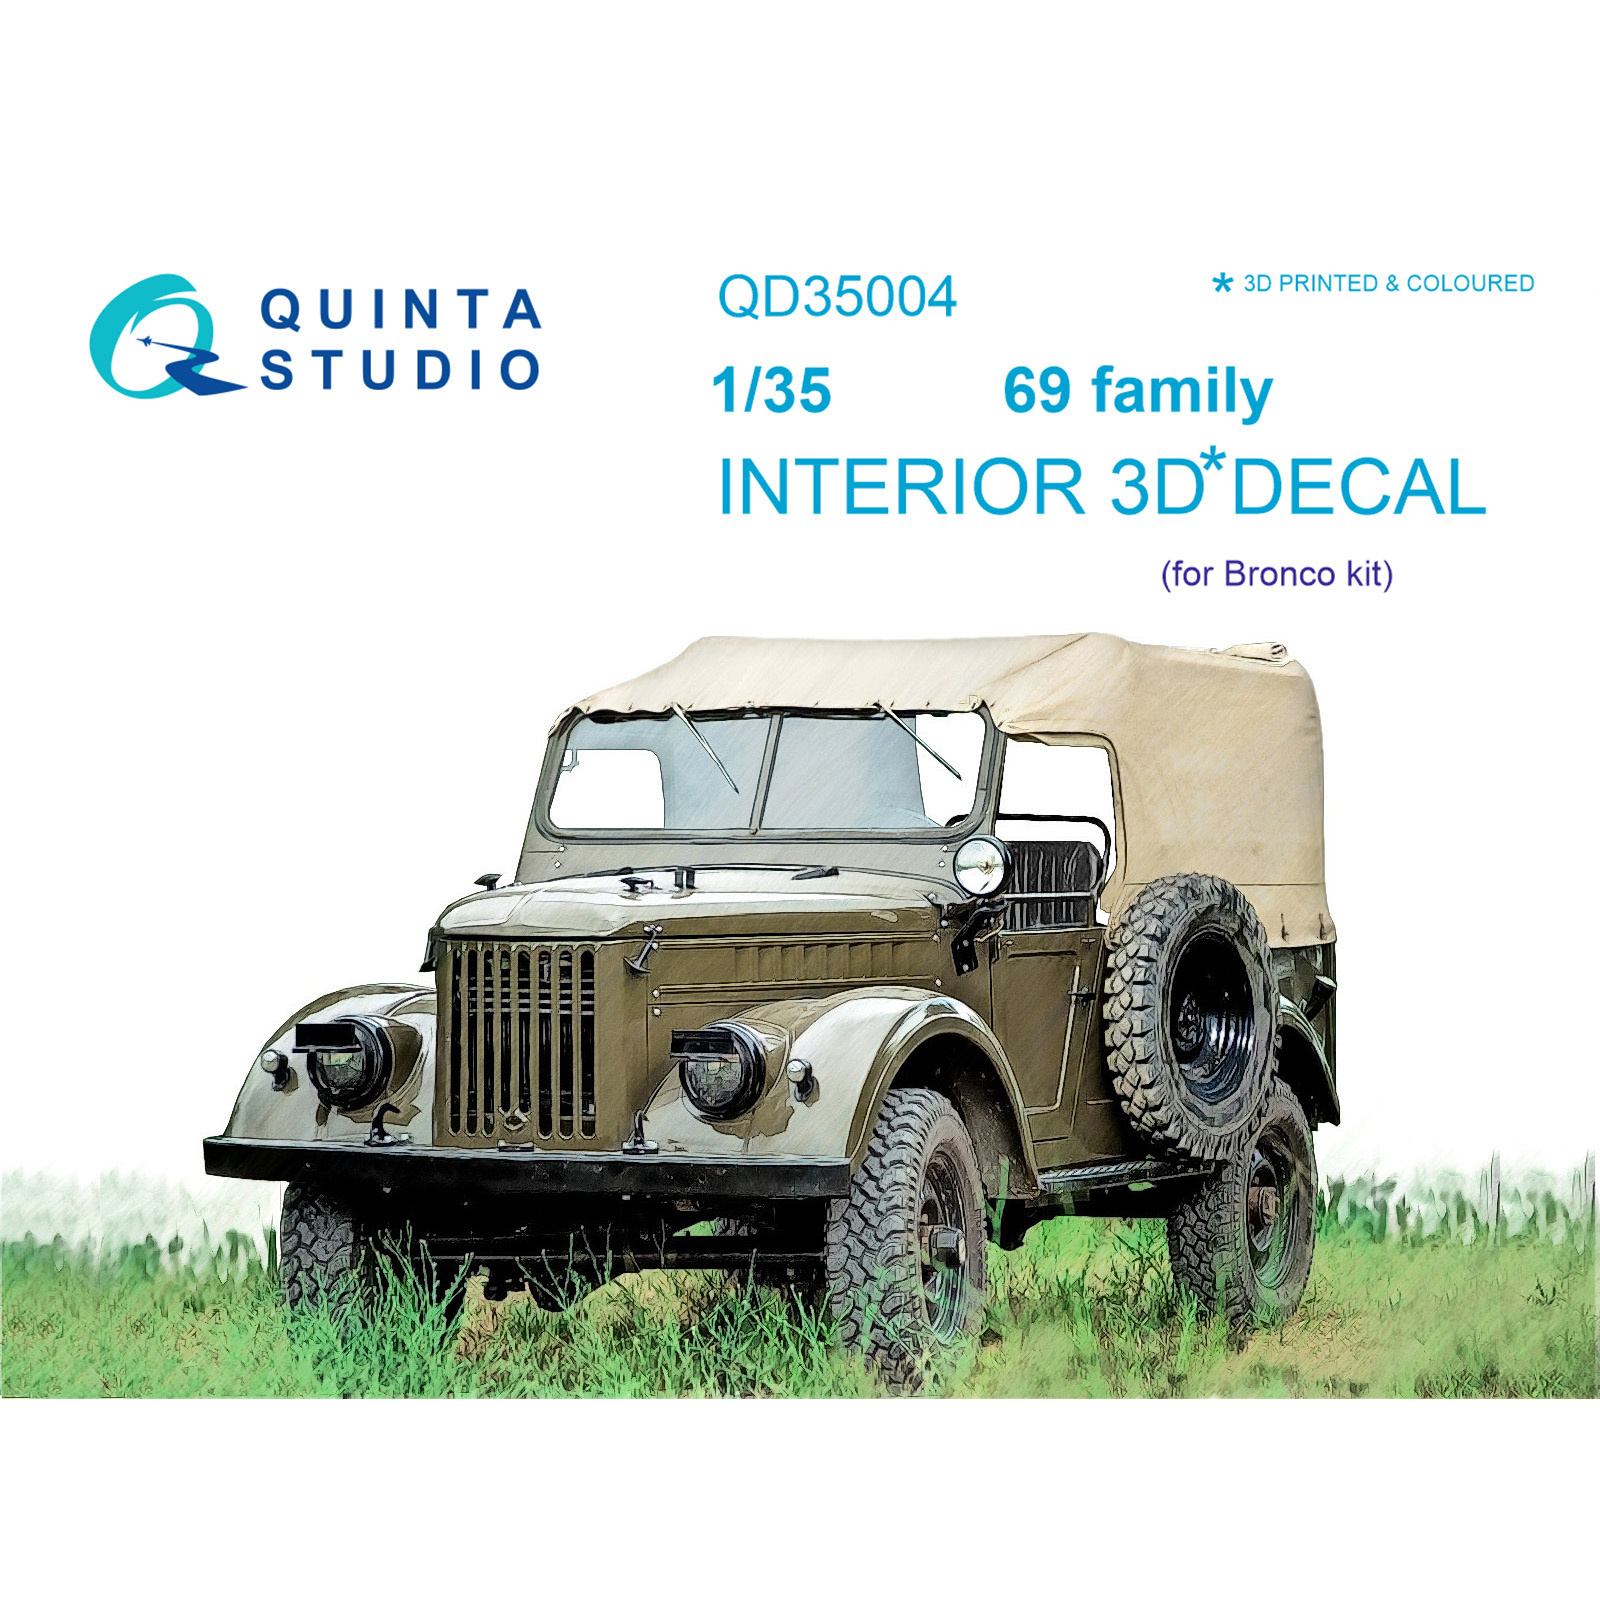 QD35004 Quinta Stuido 1/35 3D Cabin Interior Decal for the Type 69 car family (for Bronco model)